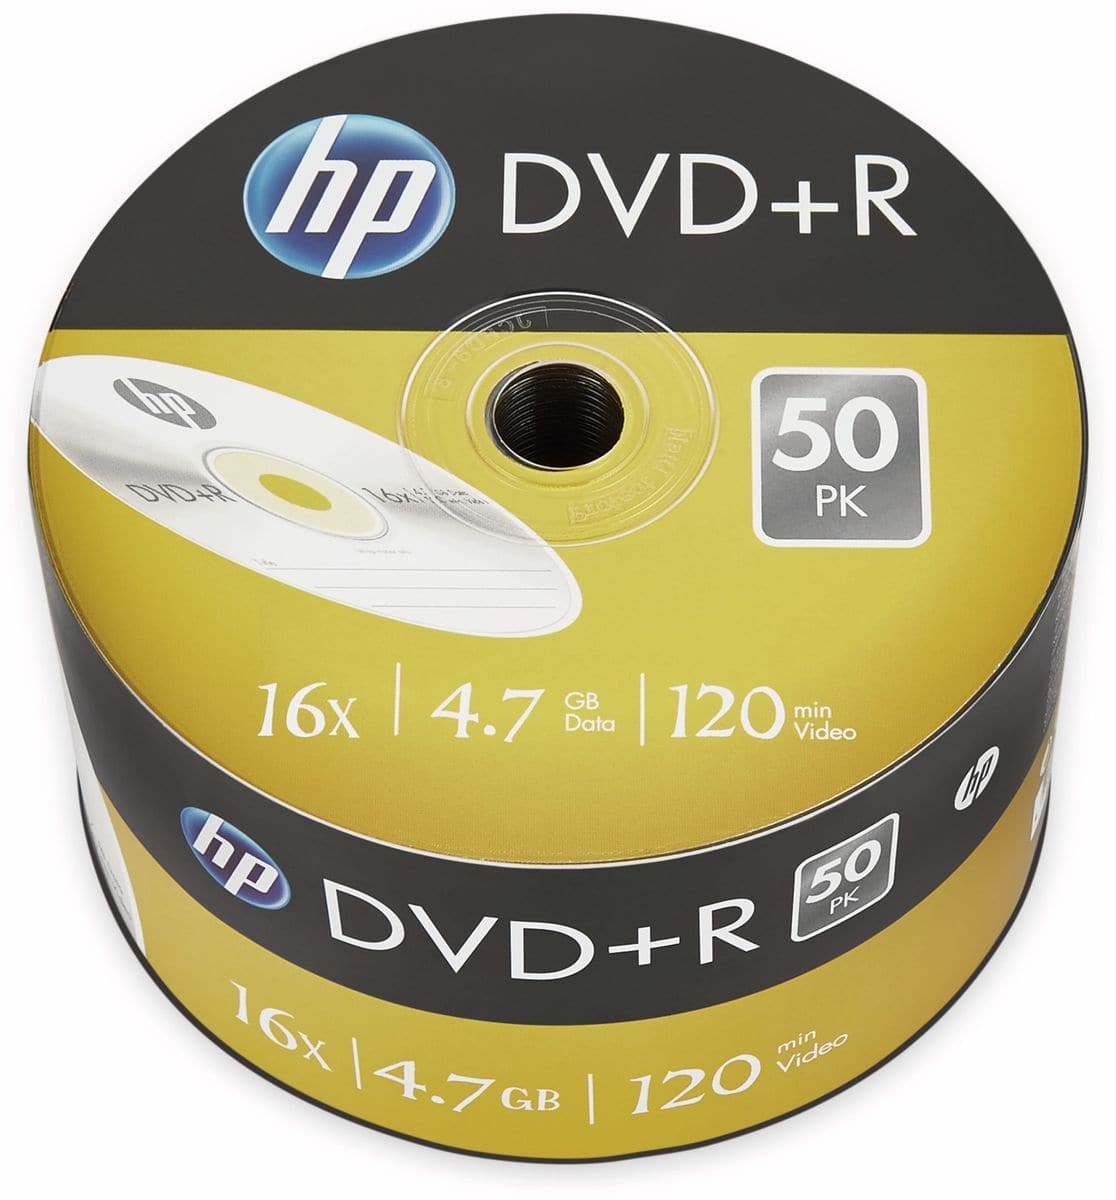 HP DVD+R 4.7GB, 120Min, 16x, Bulk-Pack, 50 CDs von HP